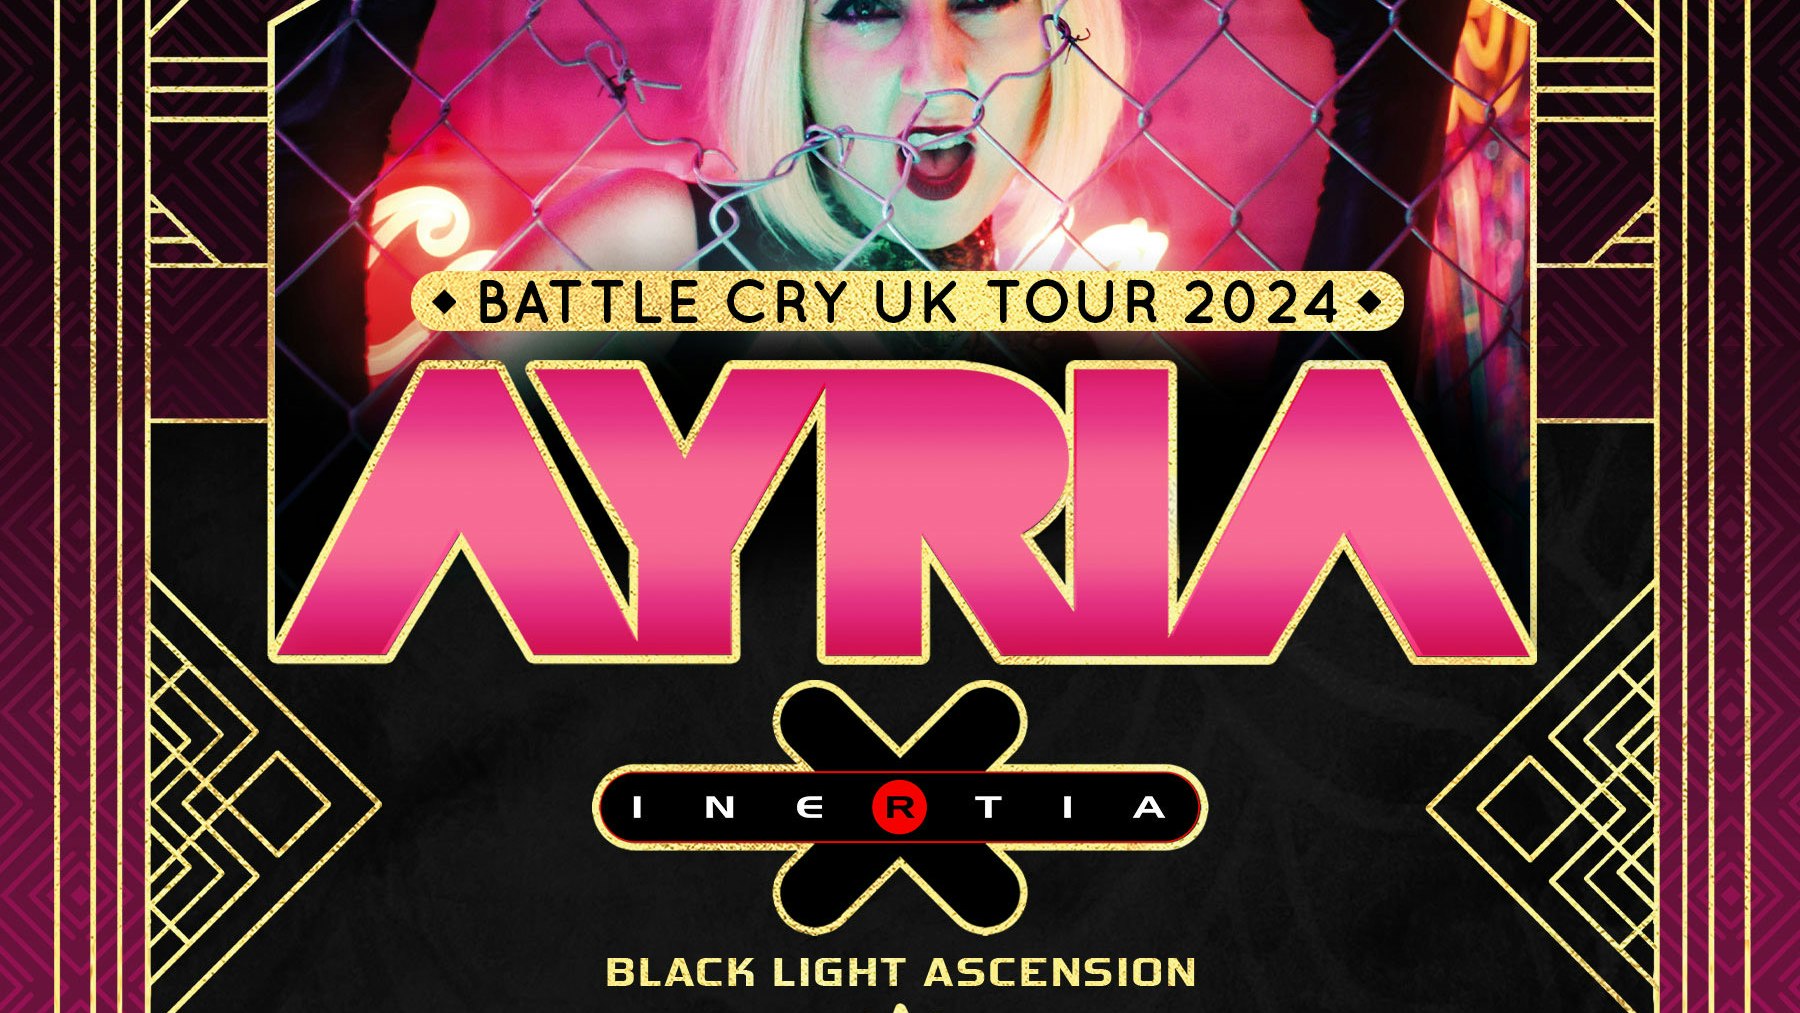 AYRIA + INERTIA & BLACK LIGHT ASCENSION